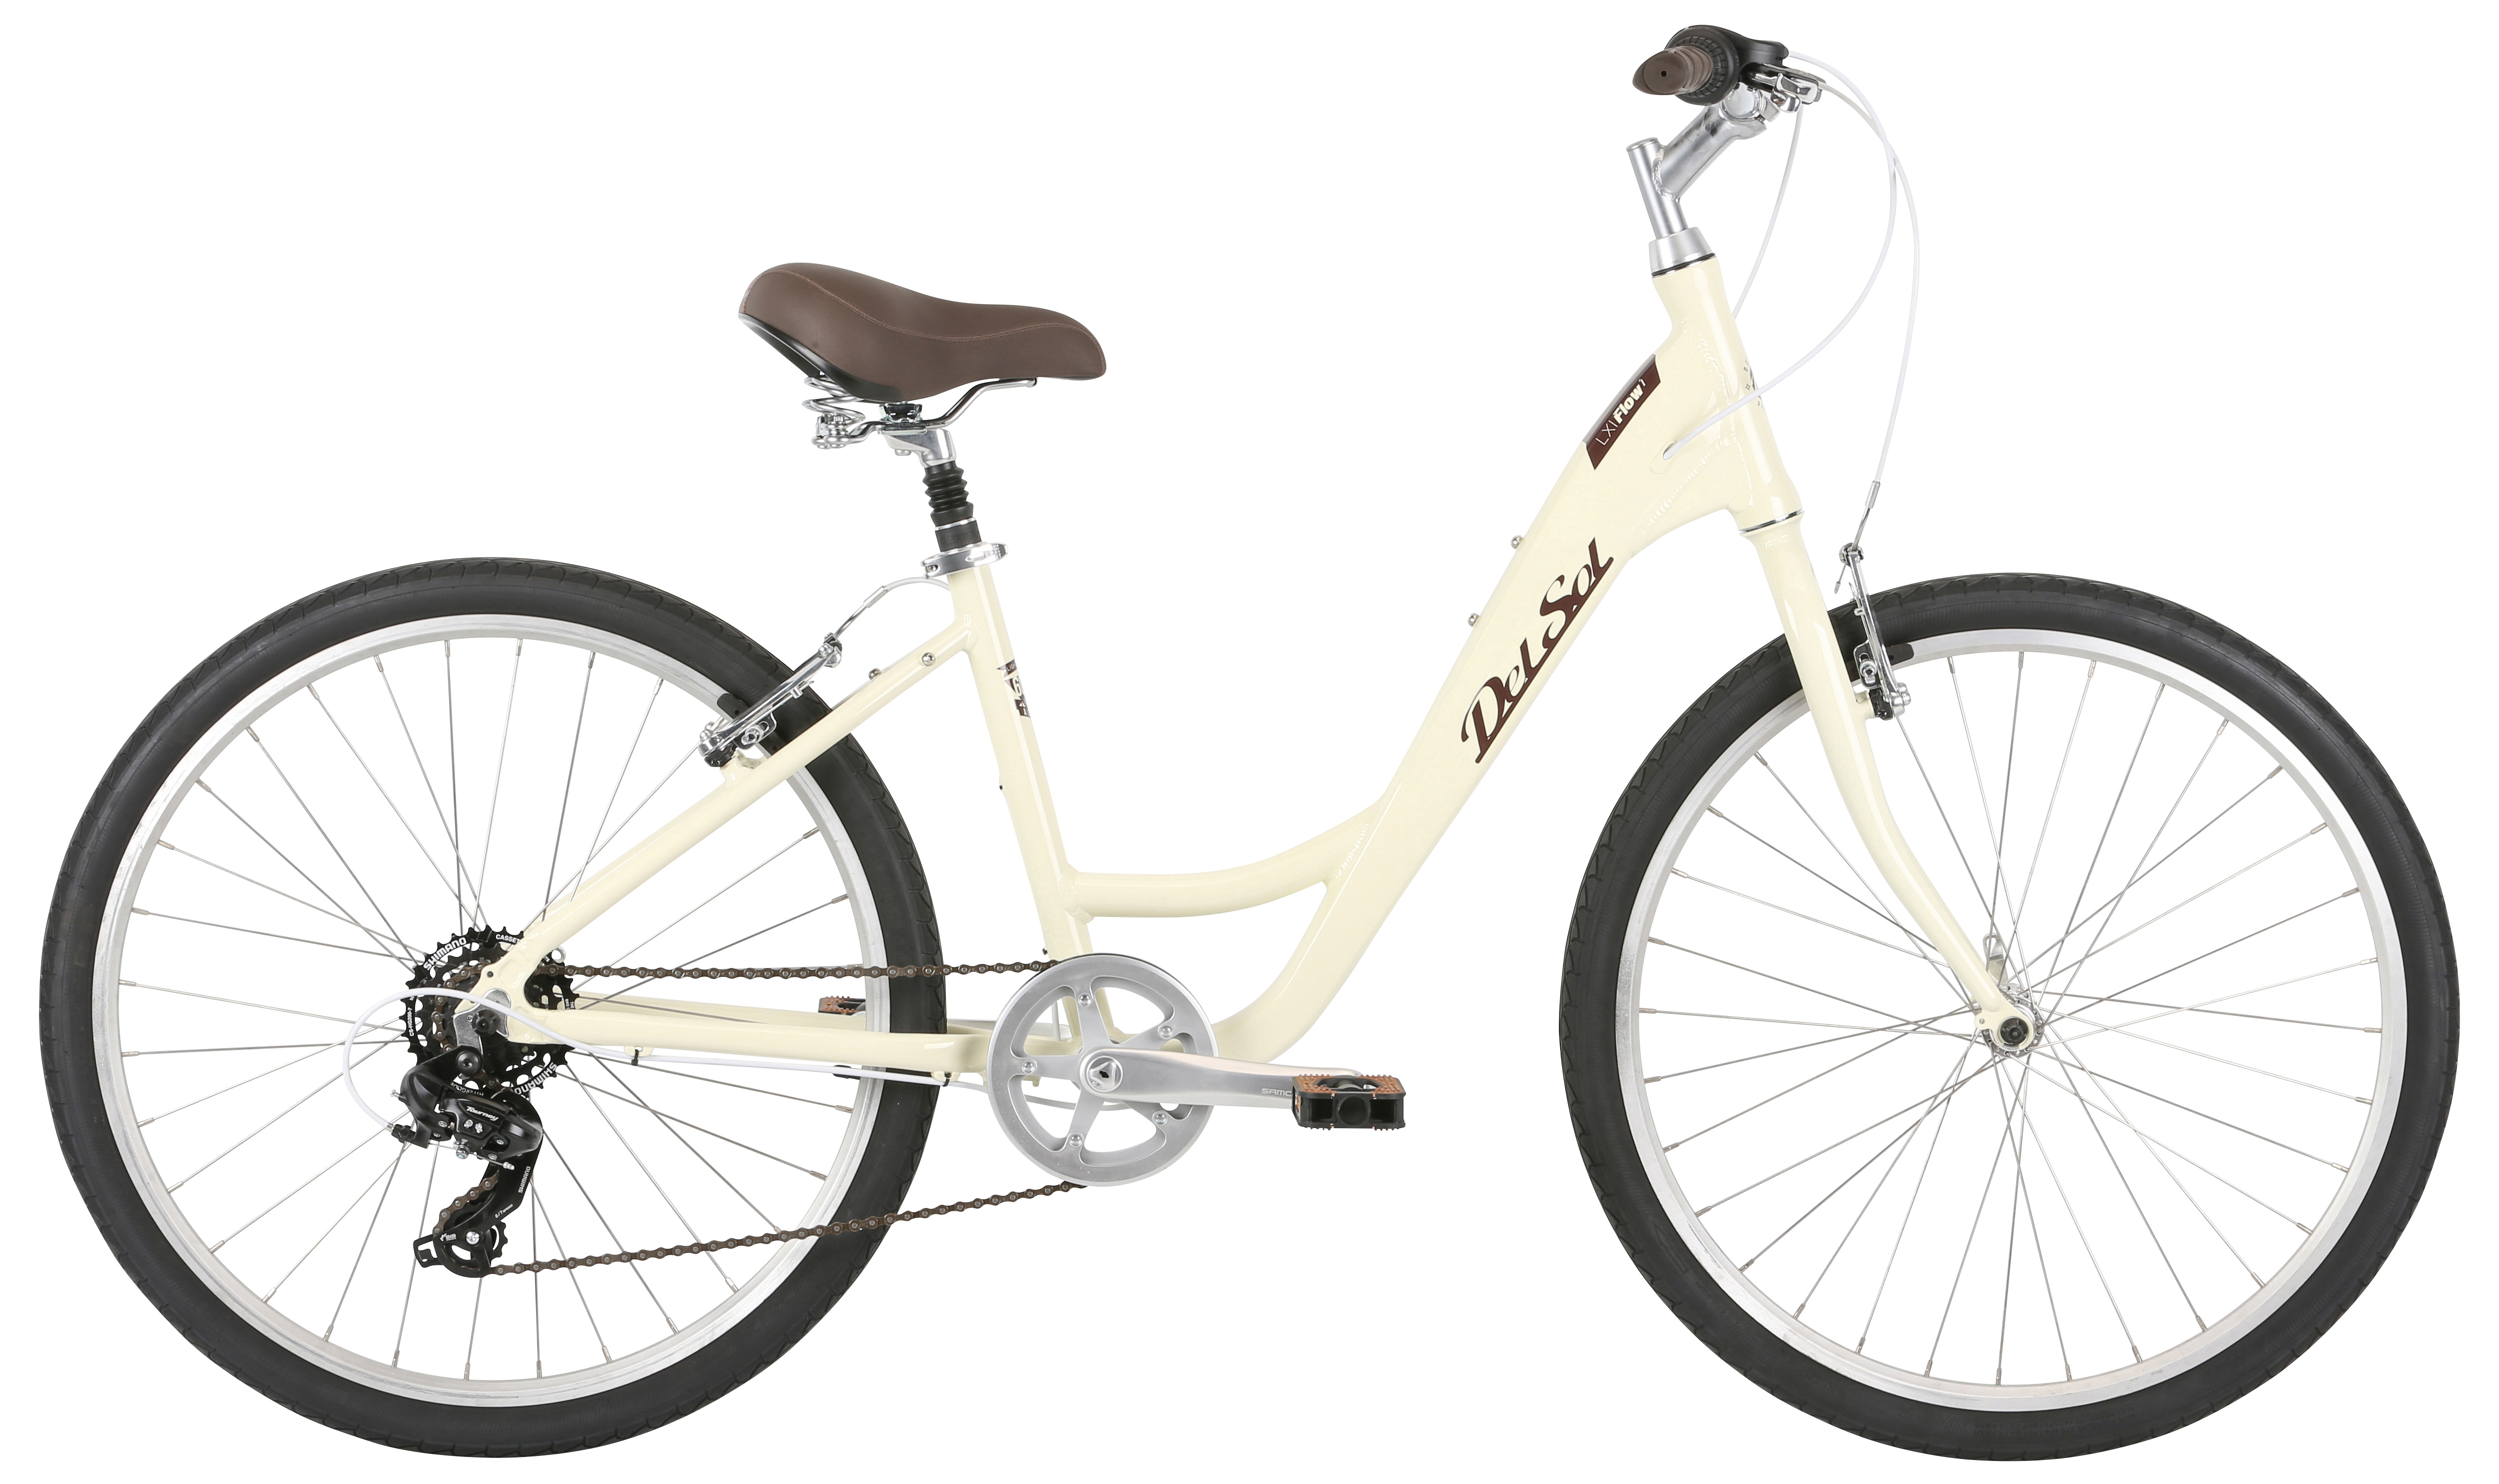  Отзывы о Женском велосипеде Haro Lxi Flow 1 ST 27.5 2019